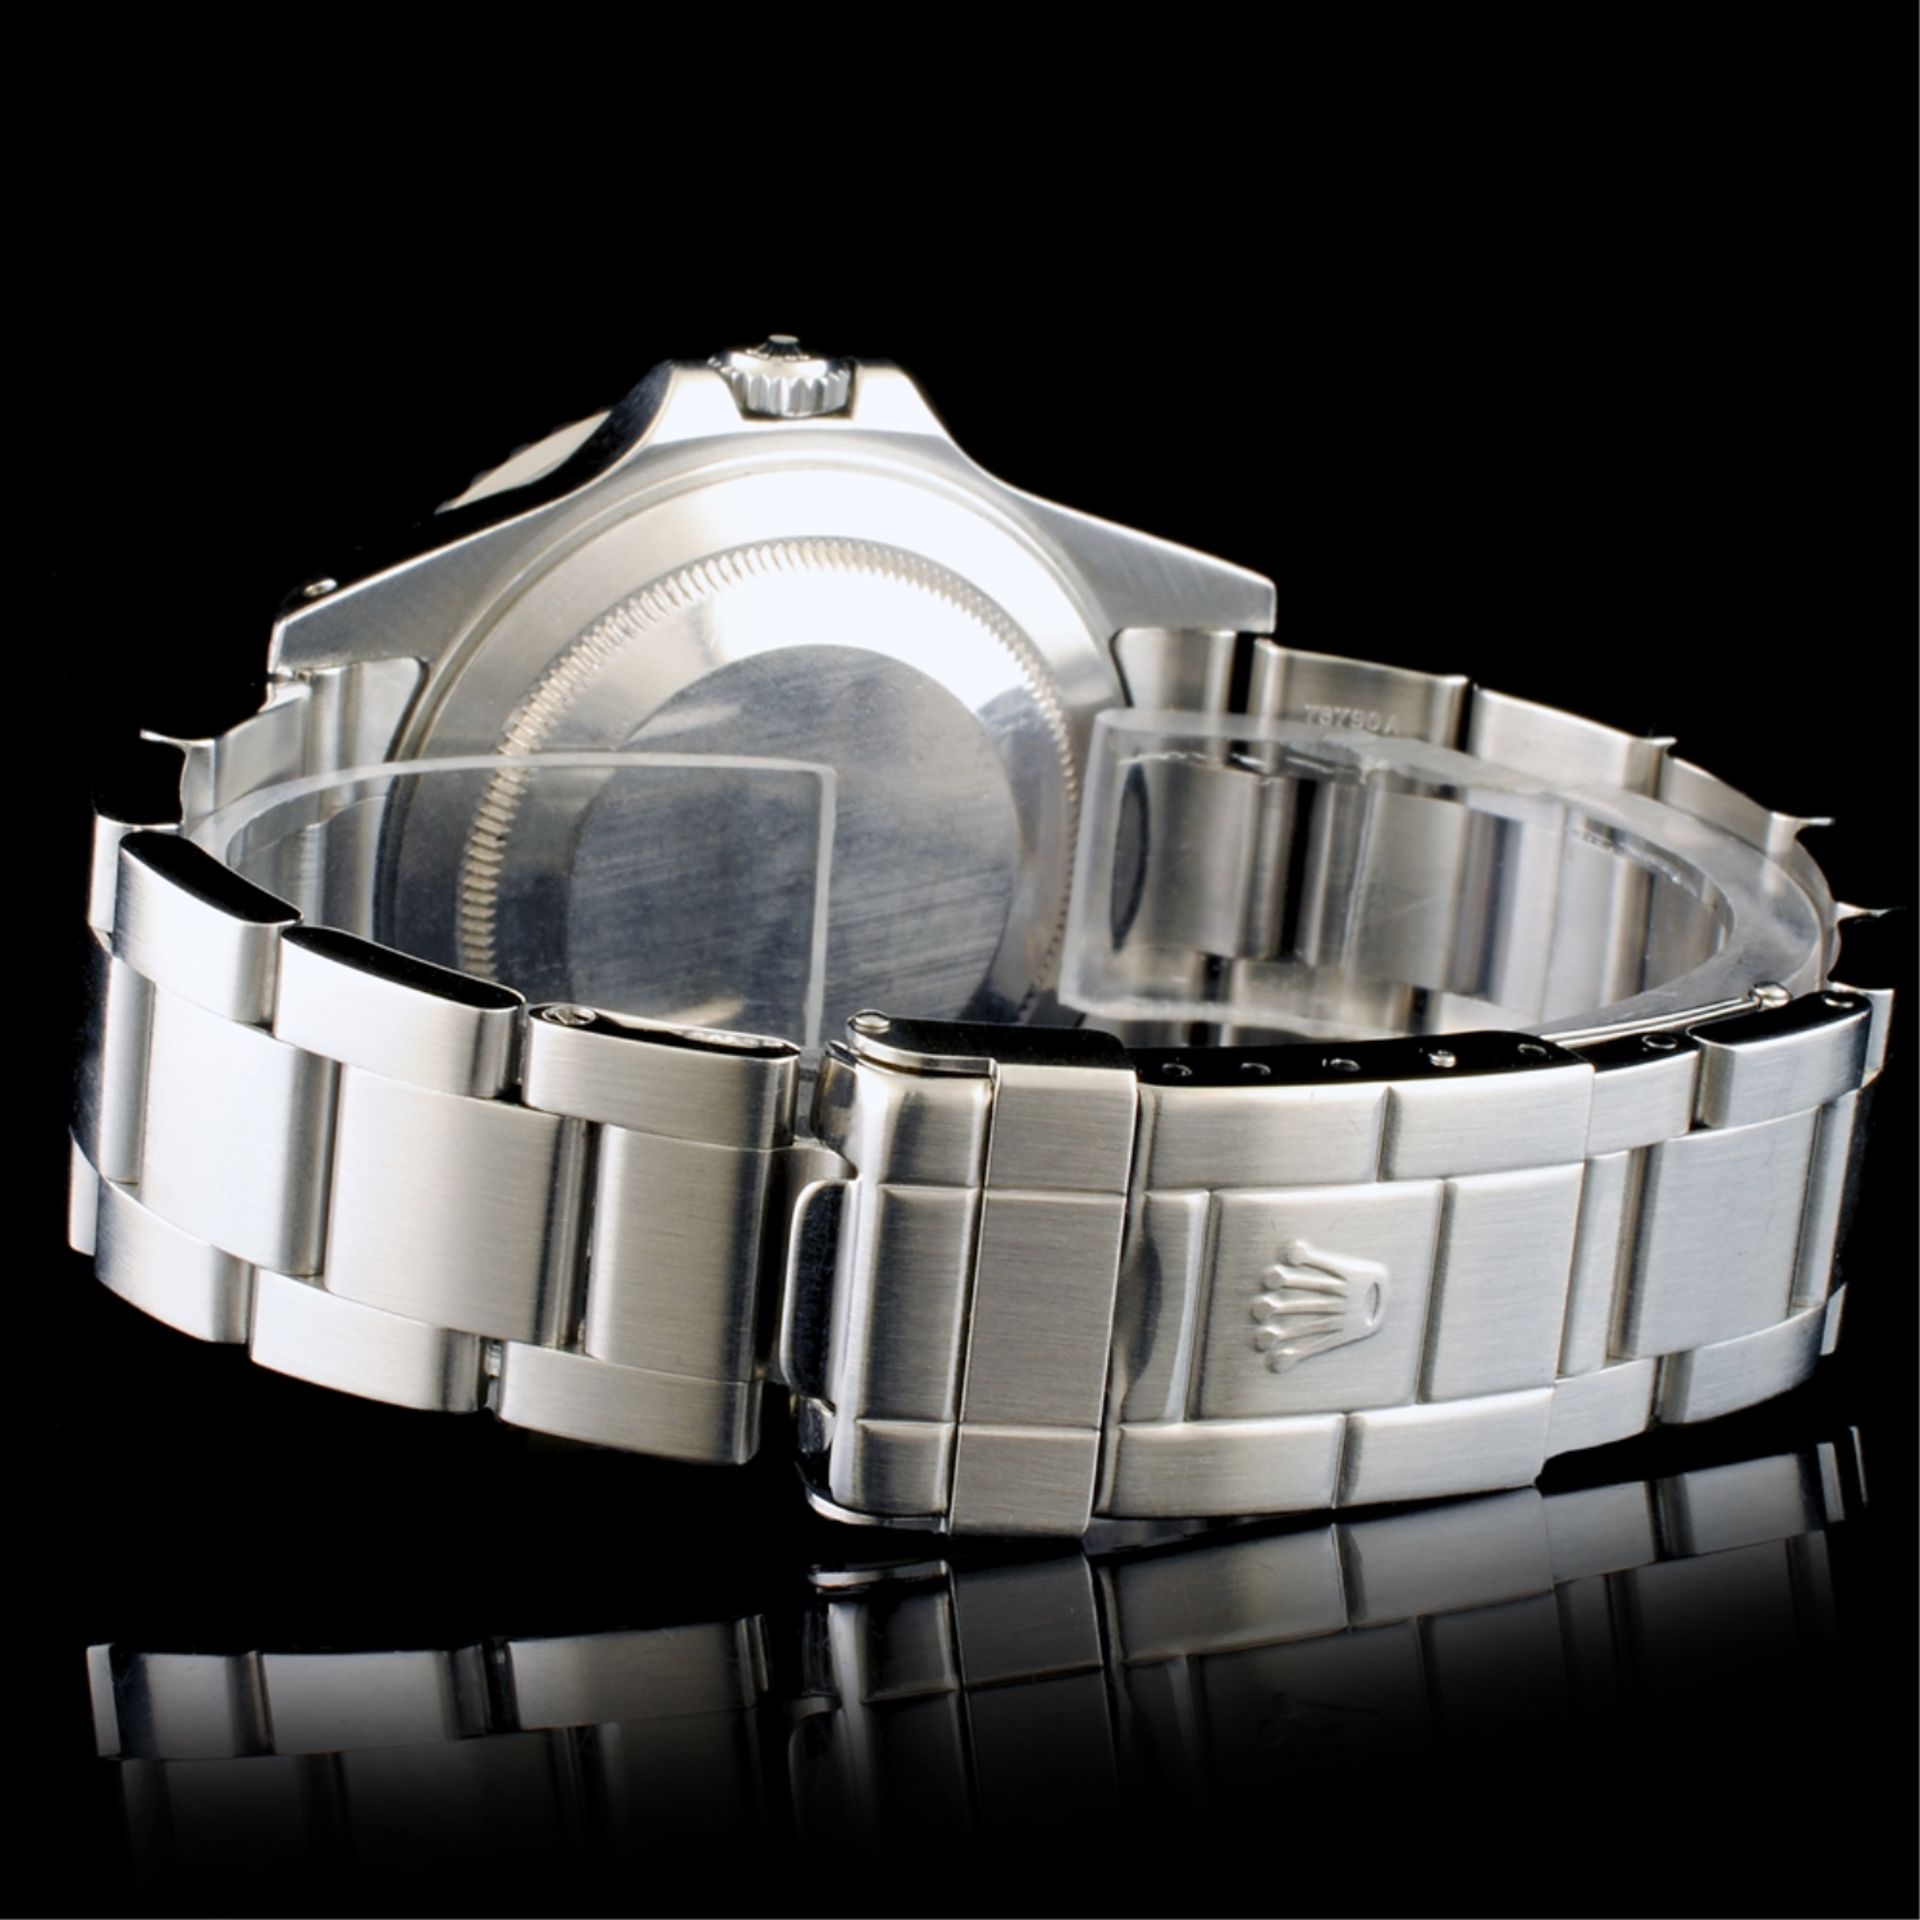 Rolex GMT-Master II â€œPepsiâ€ Stainless Steel Watch - Image 4 of 4